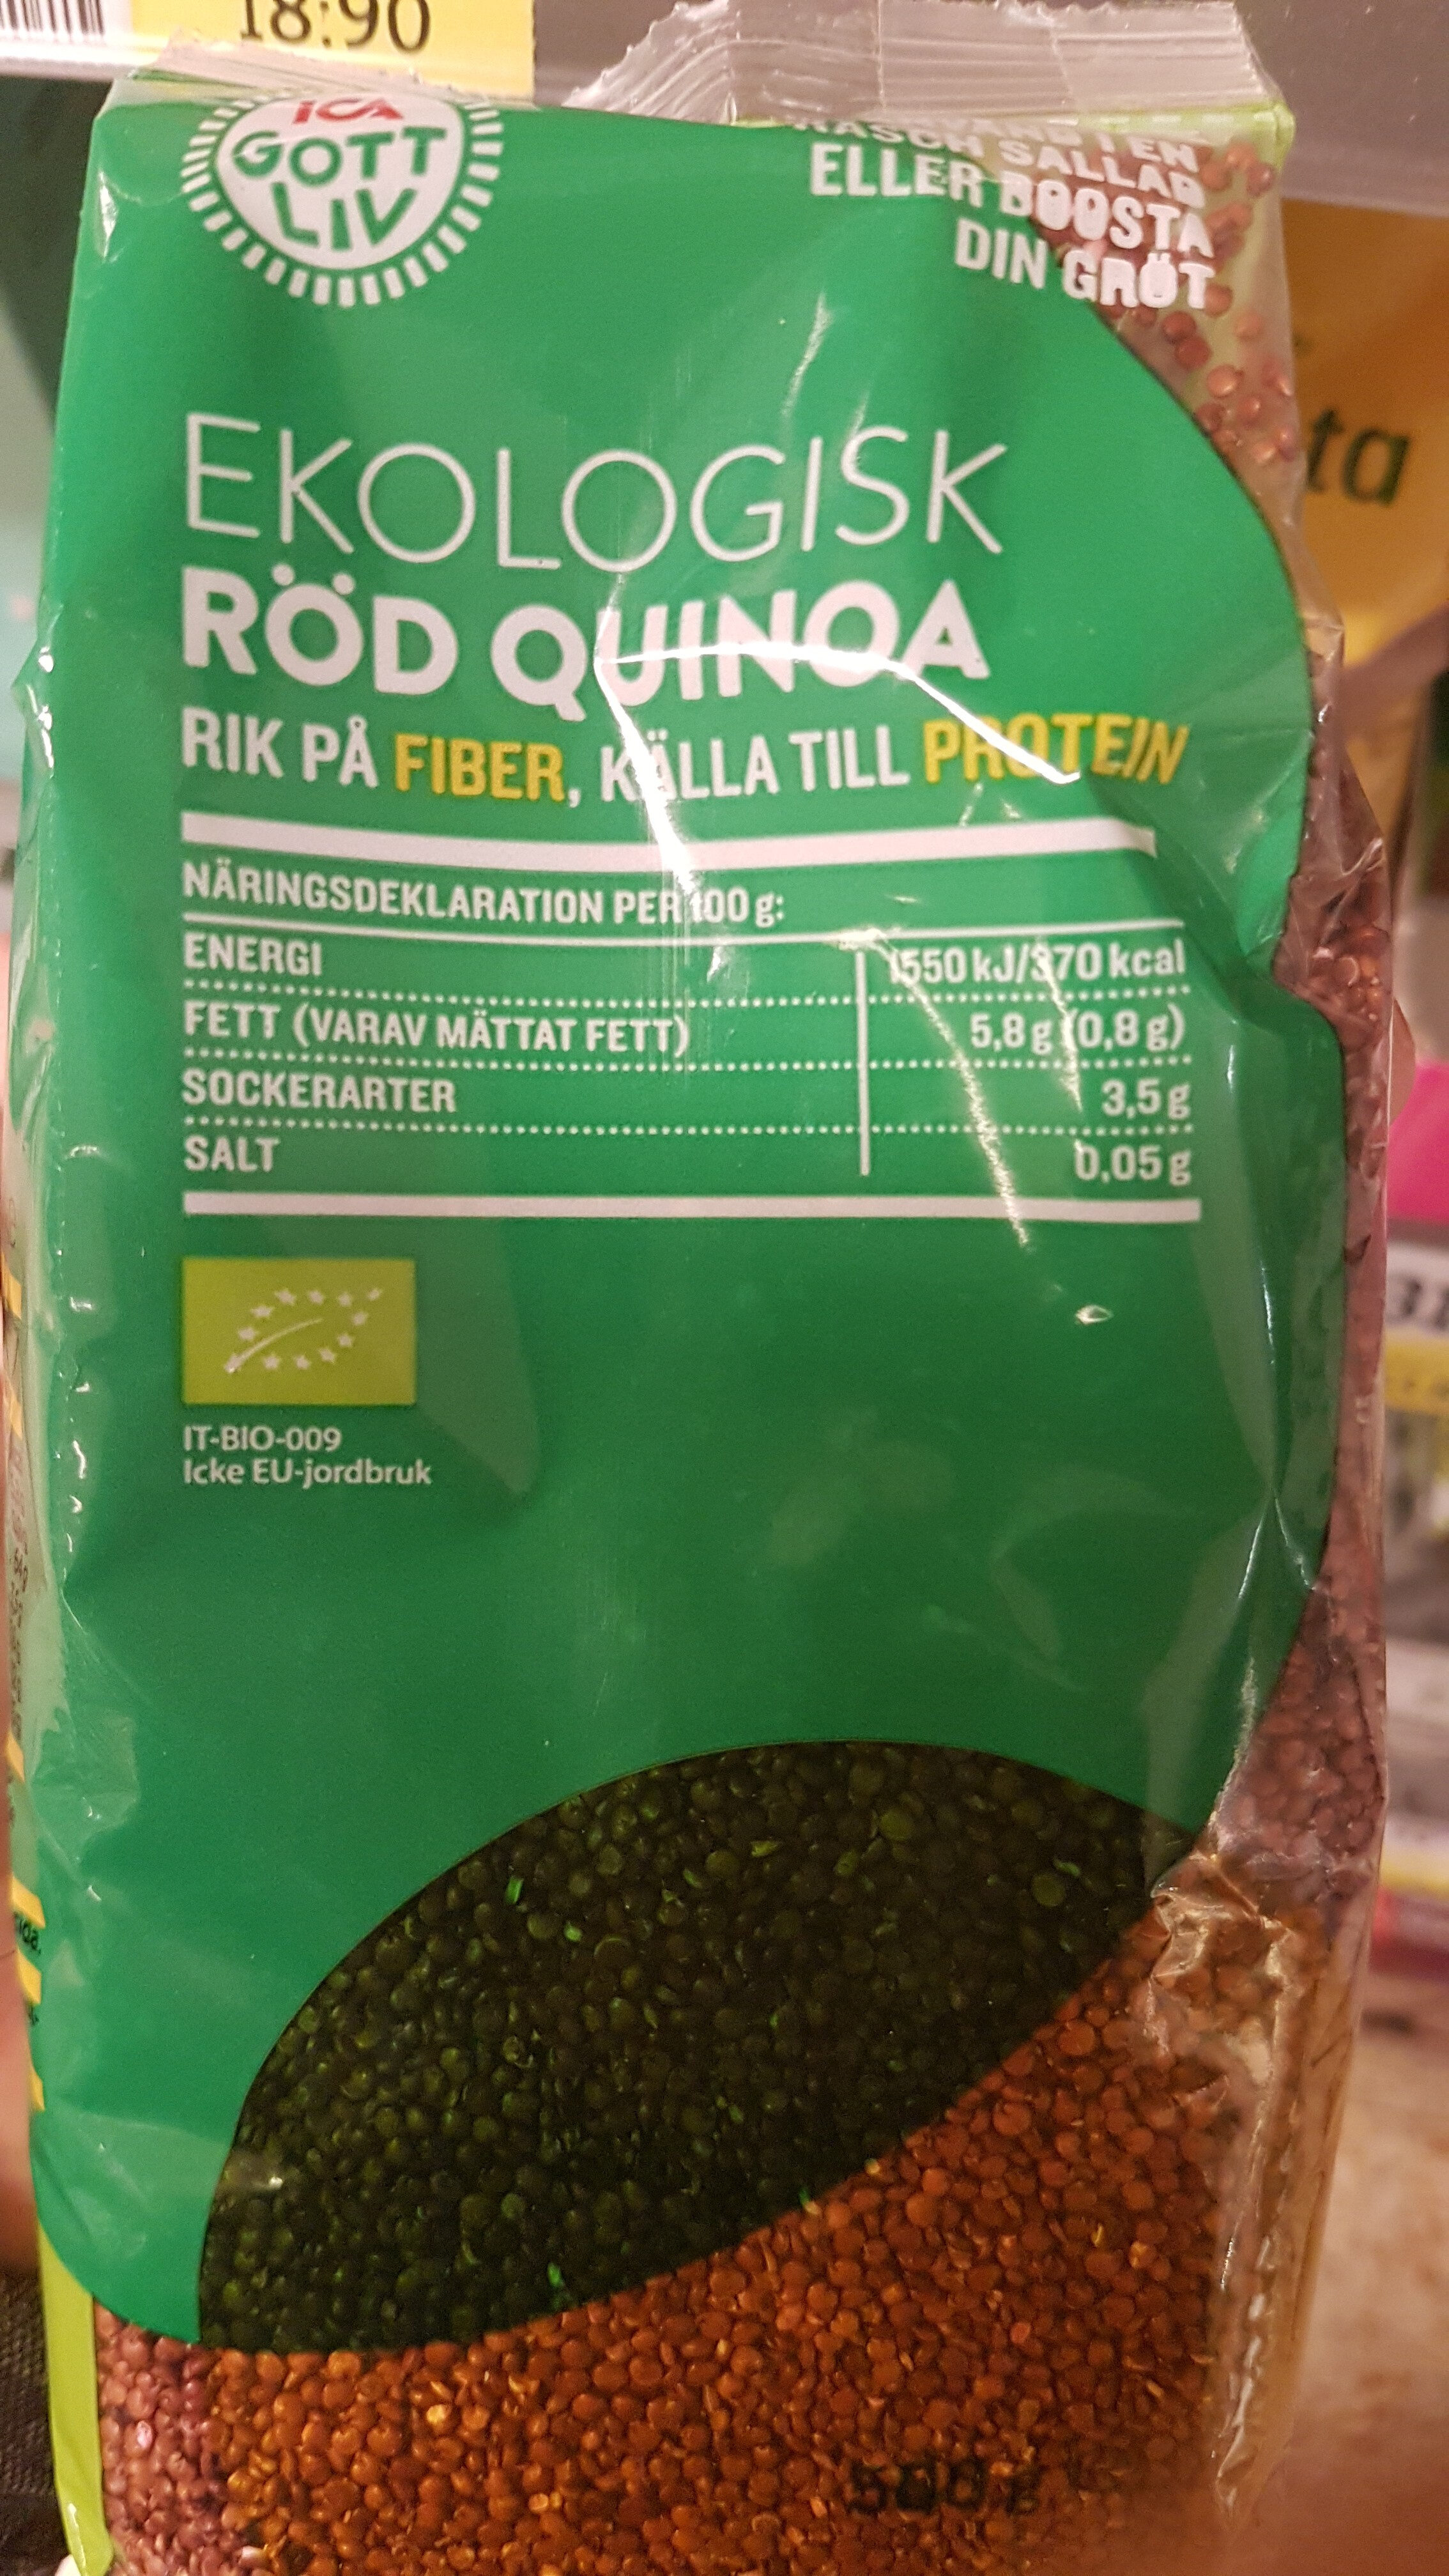 Ekologisk röd quinoa - Producto - sv